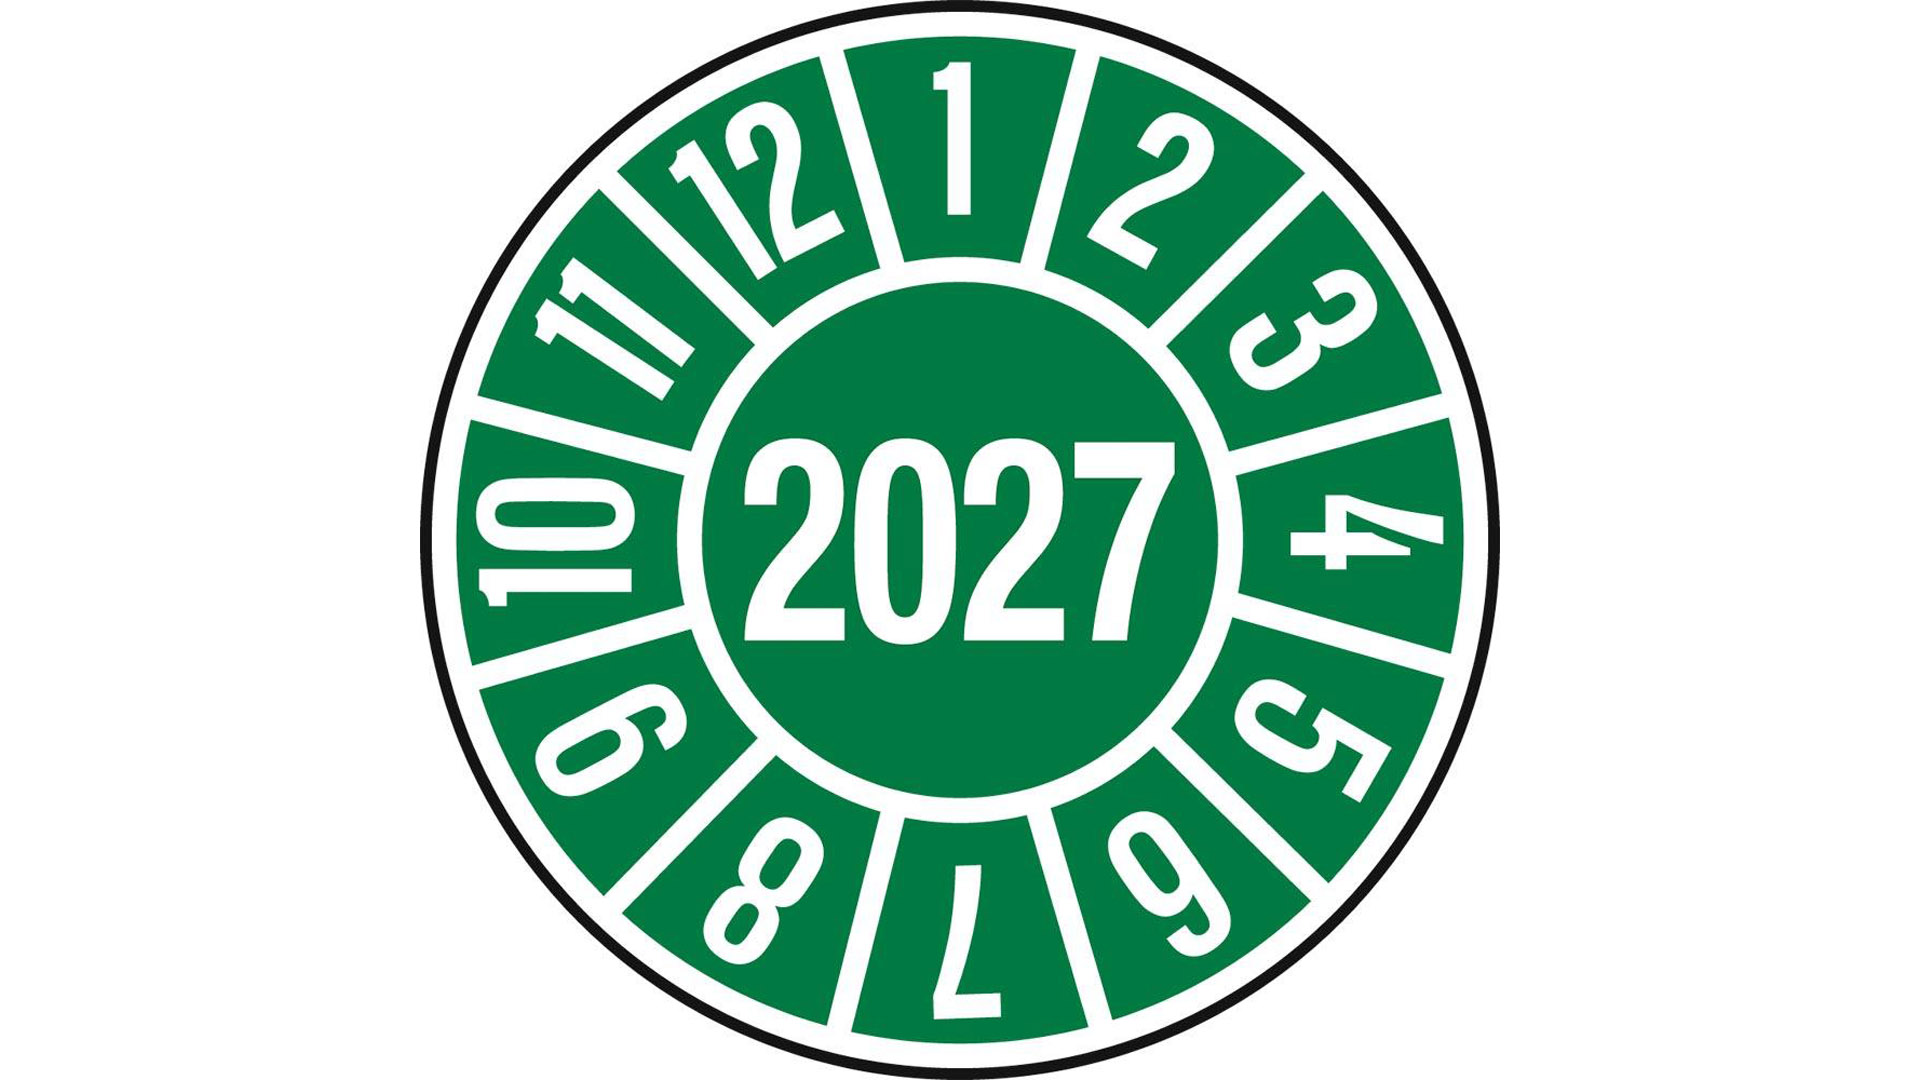 Hinweisschild, Plakette, grün, Jahr 2027, PVC-Folie, Durchm. 35 mm, VE 10 Stück, Mindestabnahme 10 VE